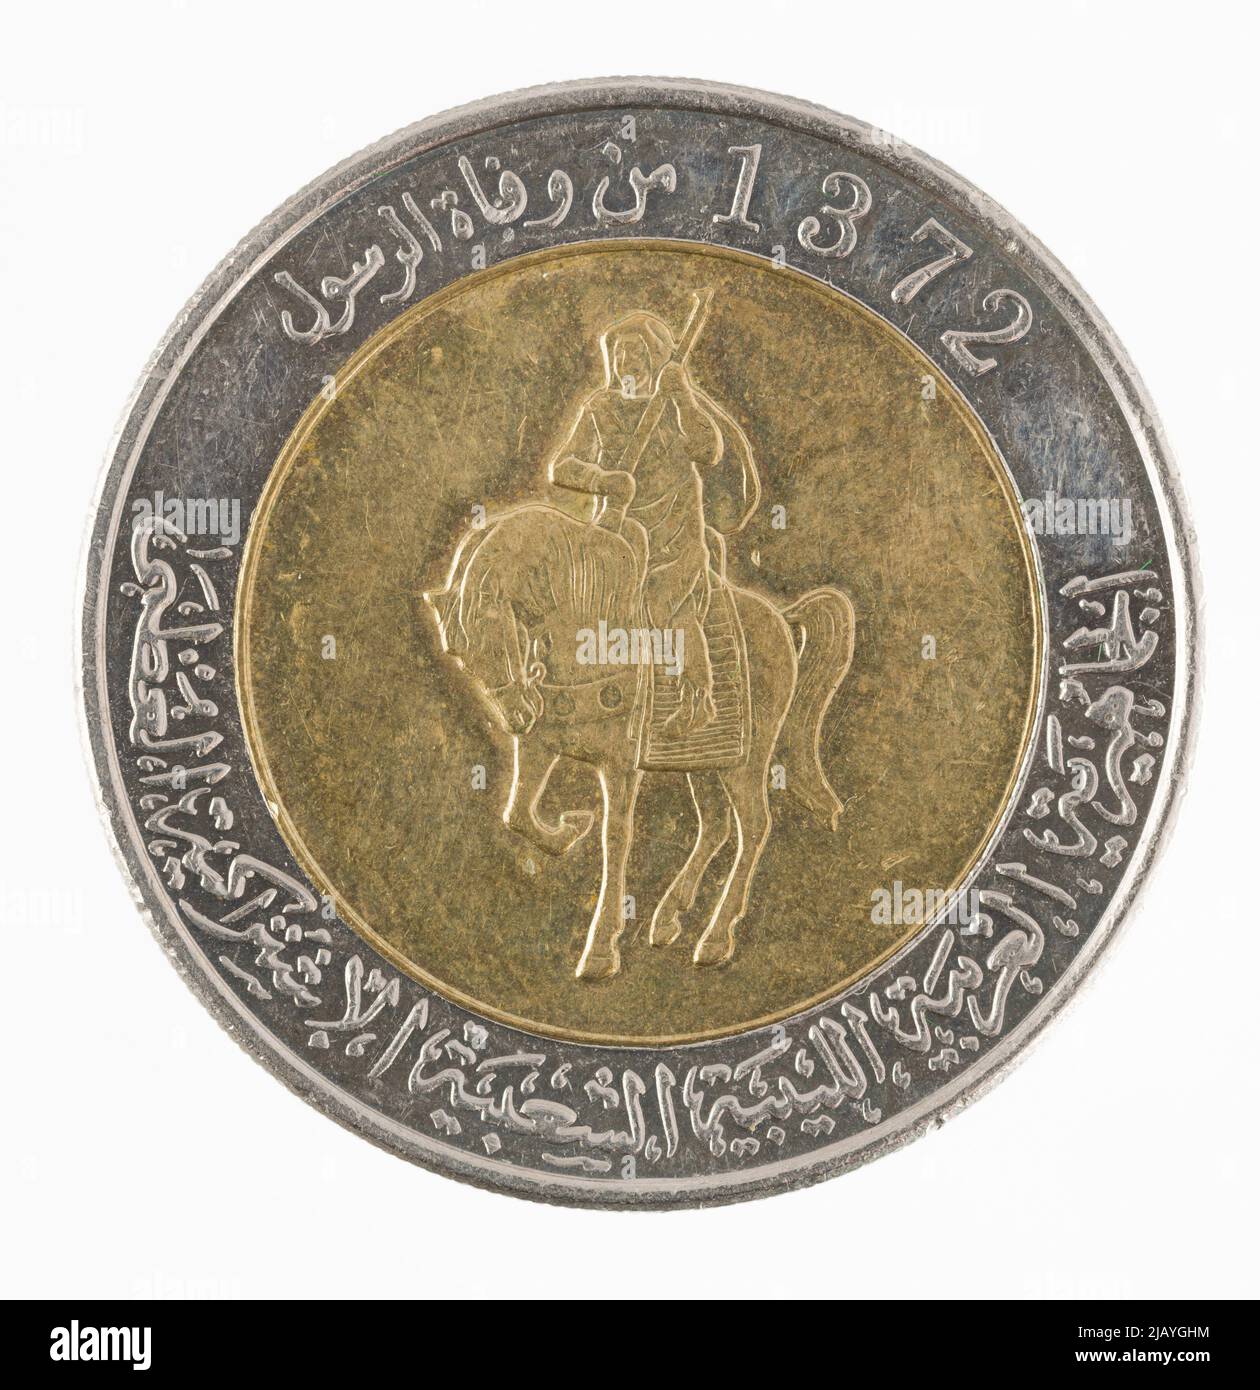 LIBIA, 1/2 DINARA, 2004 (AH 1372) Banque centrale de Libye Banque D'Images